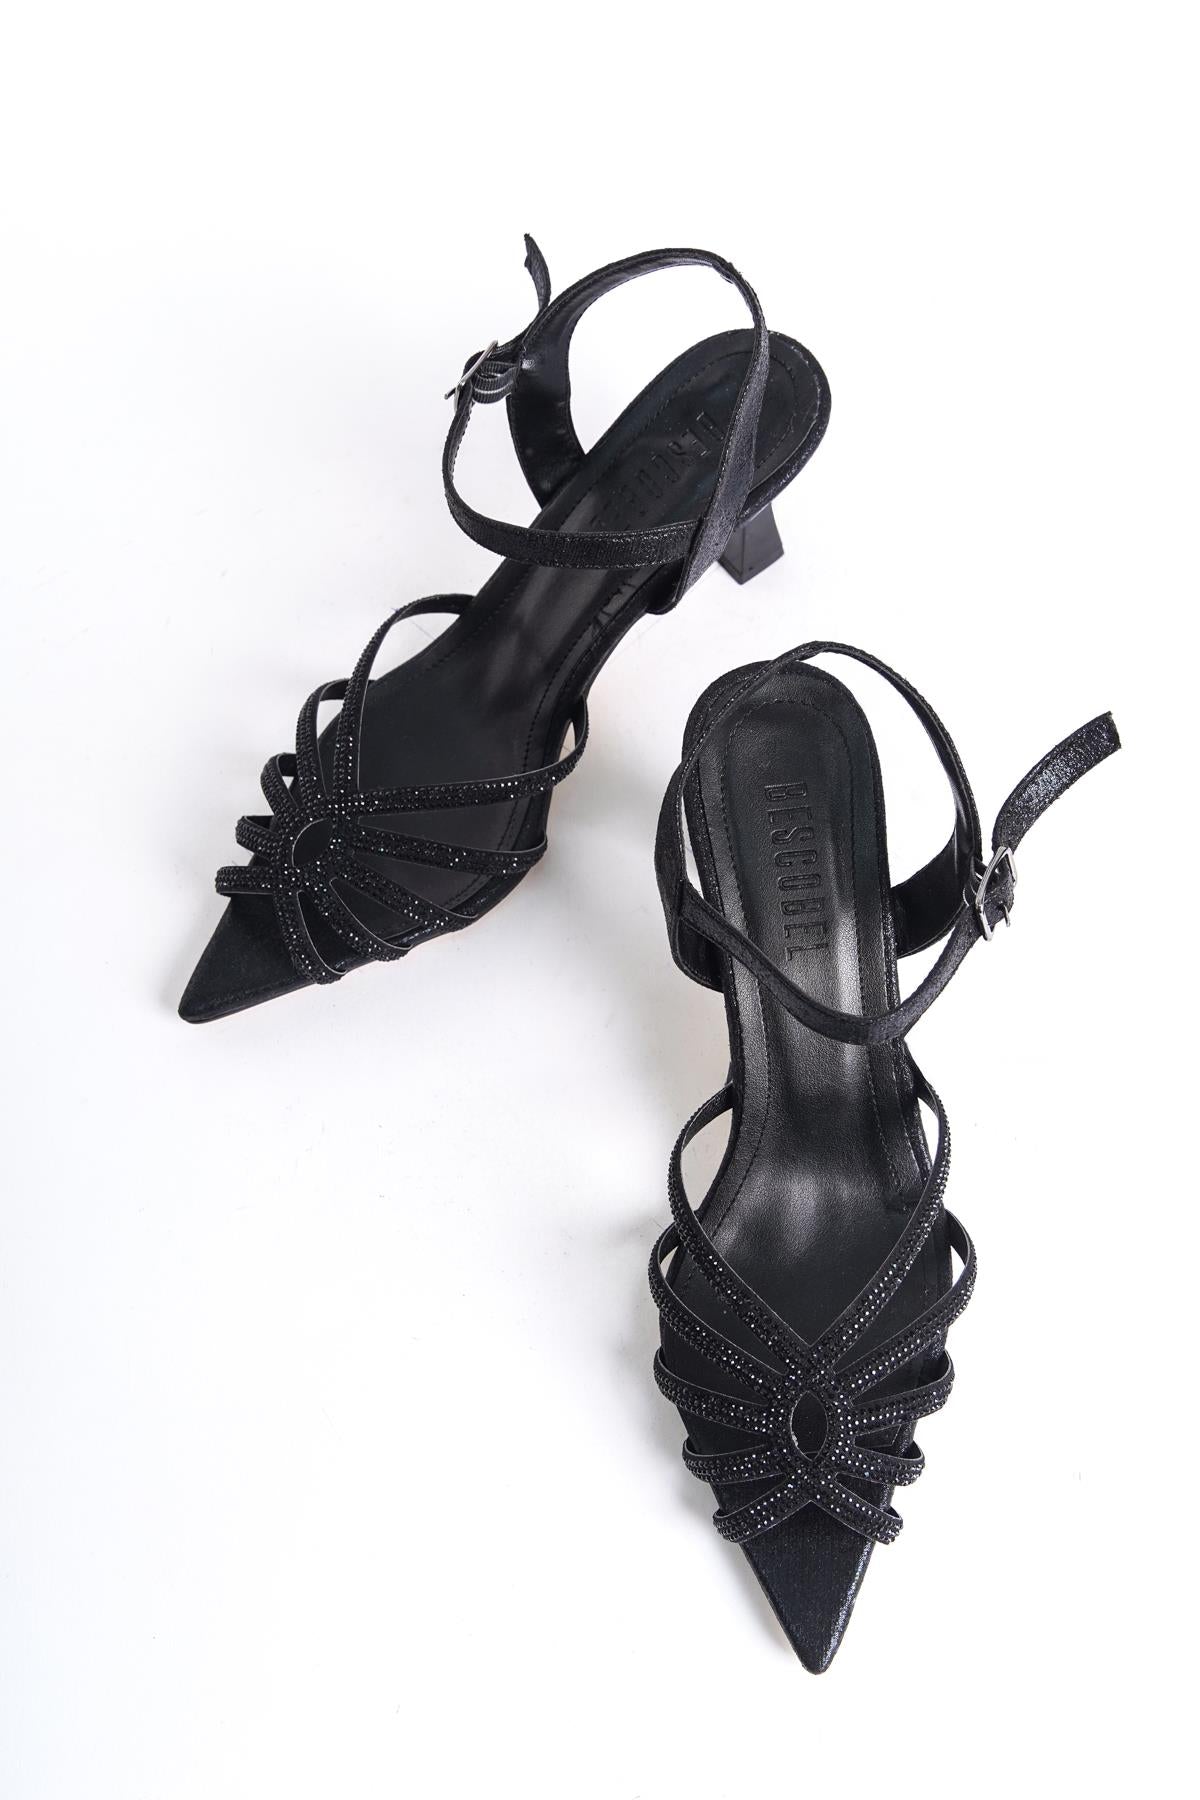 Women's Black Thin Heel Pointed Toe Evening Dress Shoes 8 Cm Heel - STREETMODE™